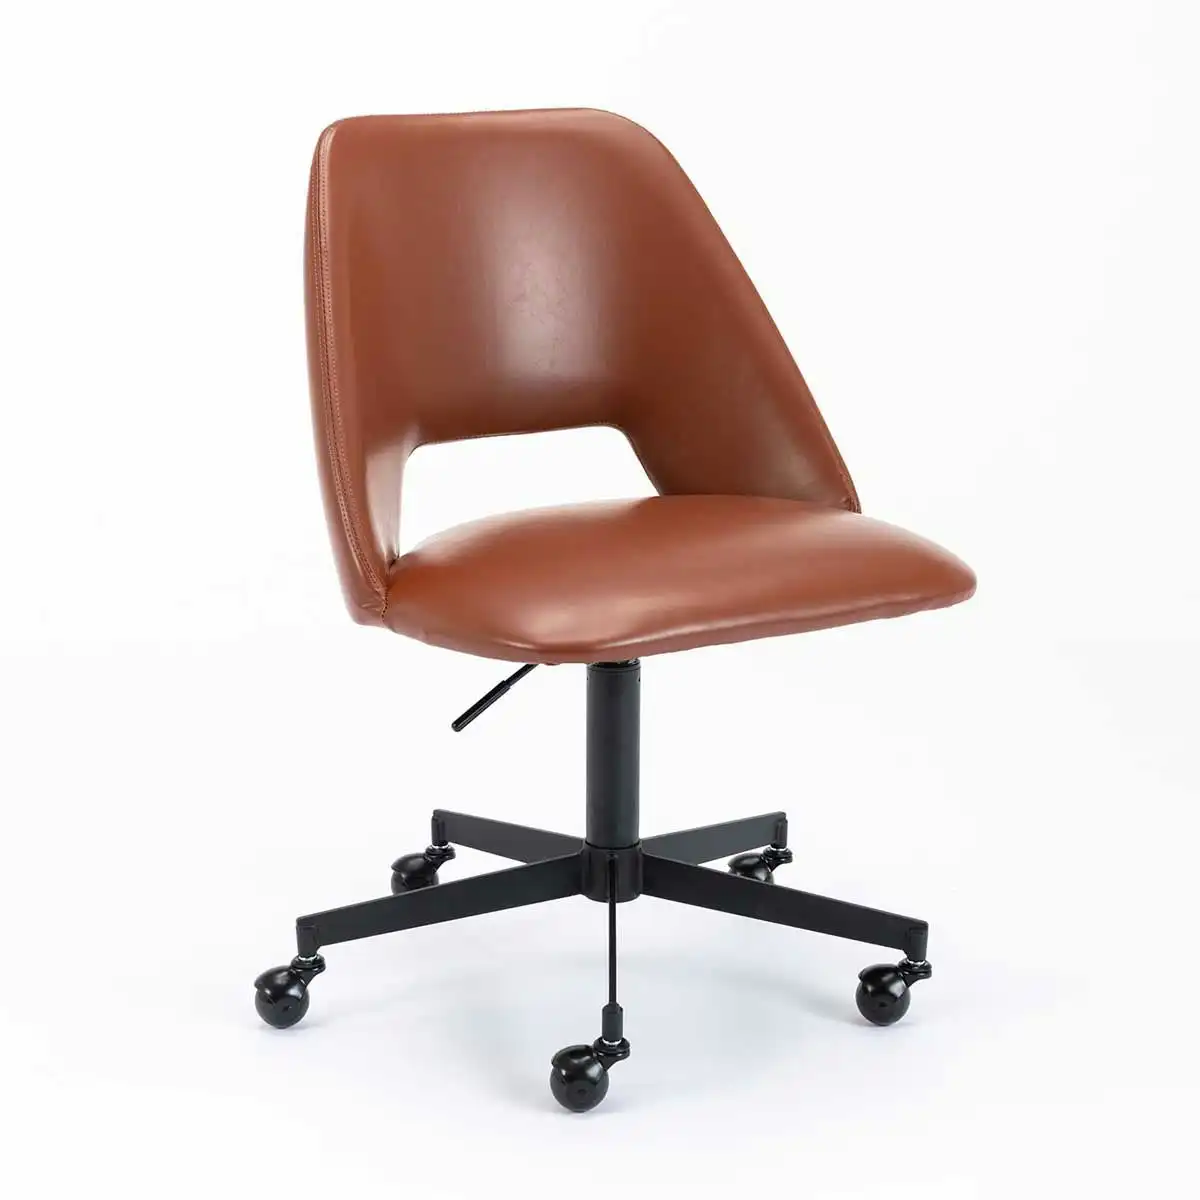 Belmont Leatherette Office Chair (Black, Tan)